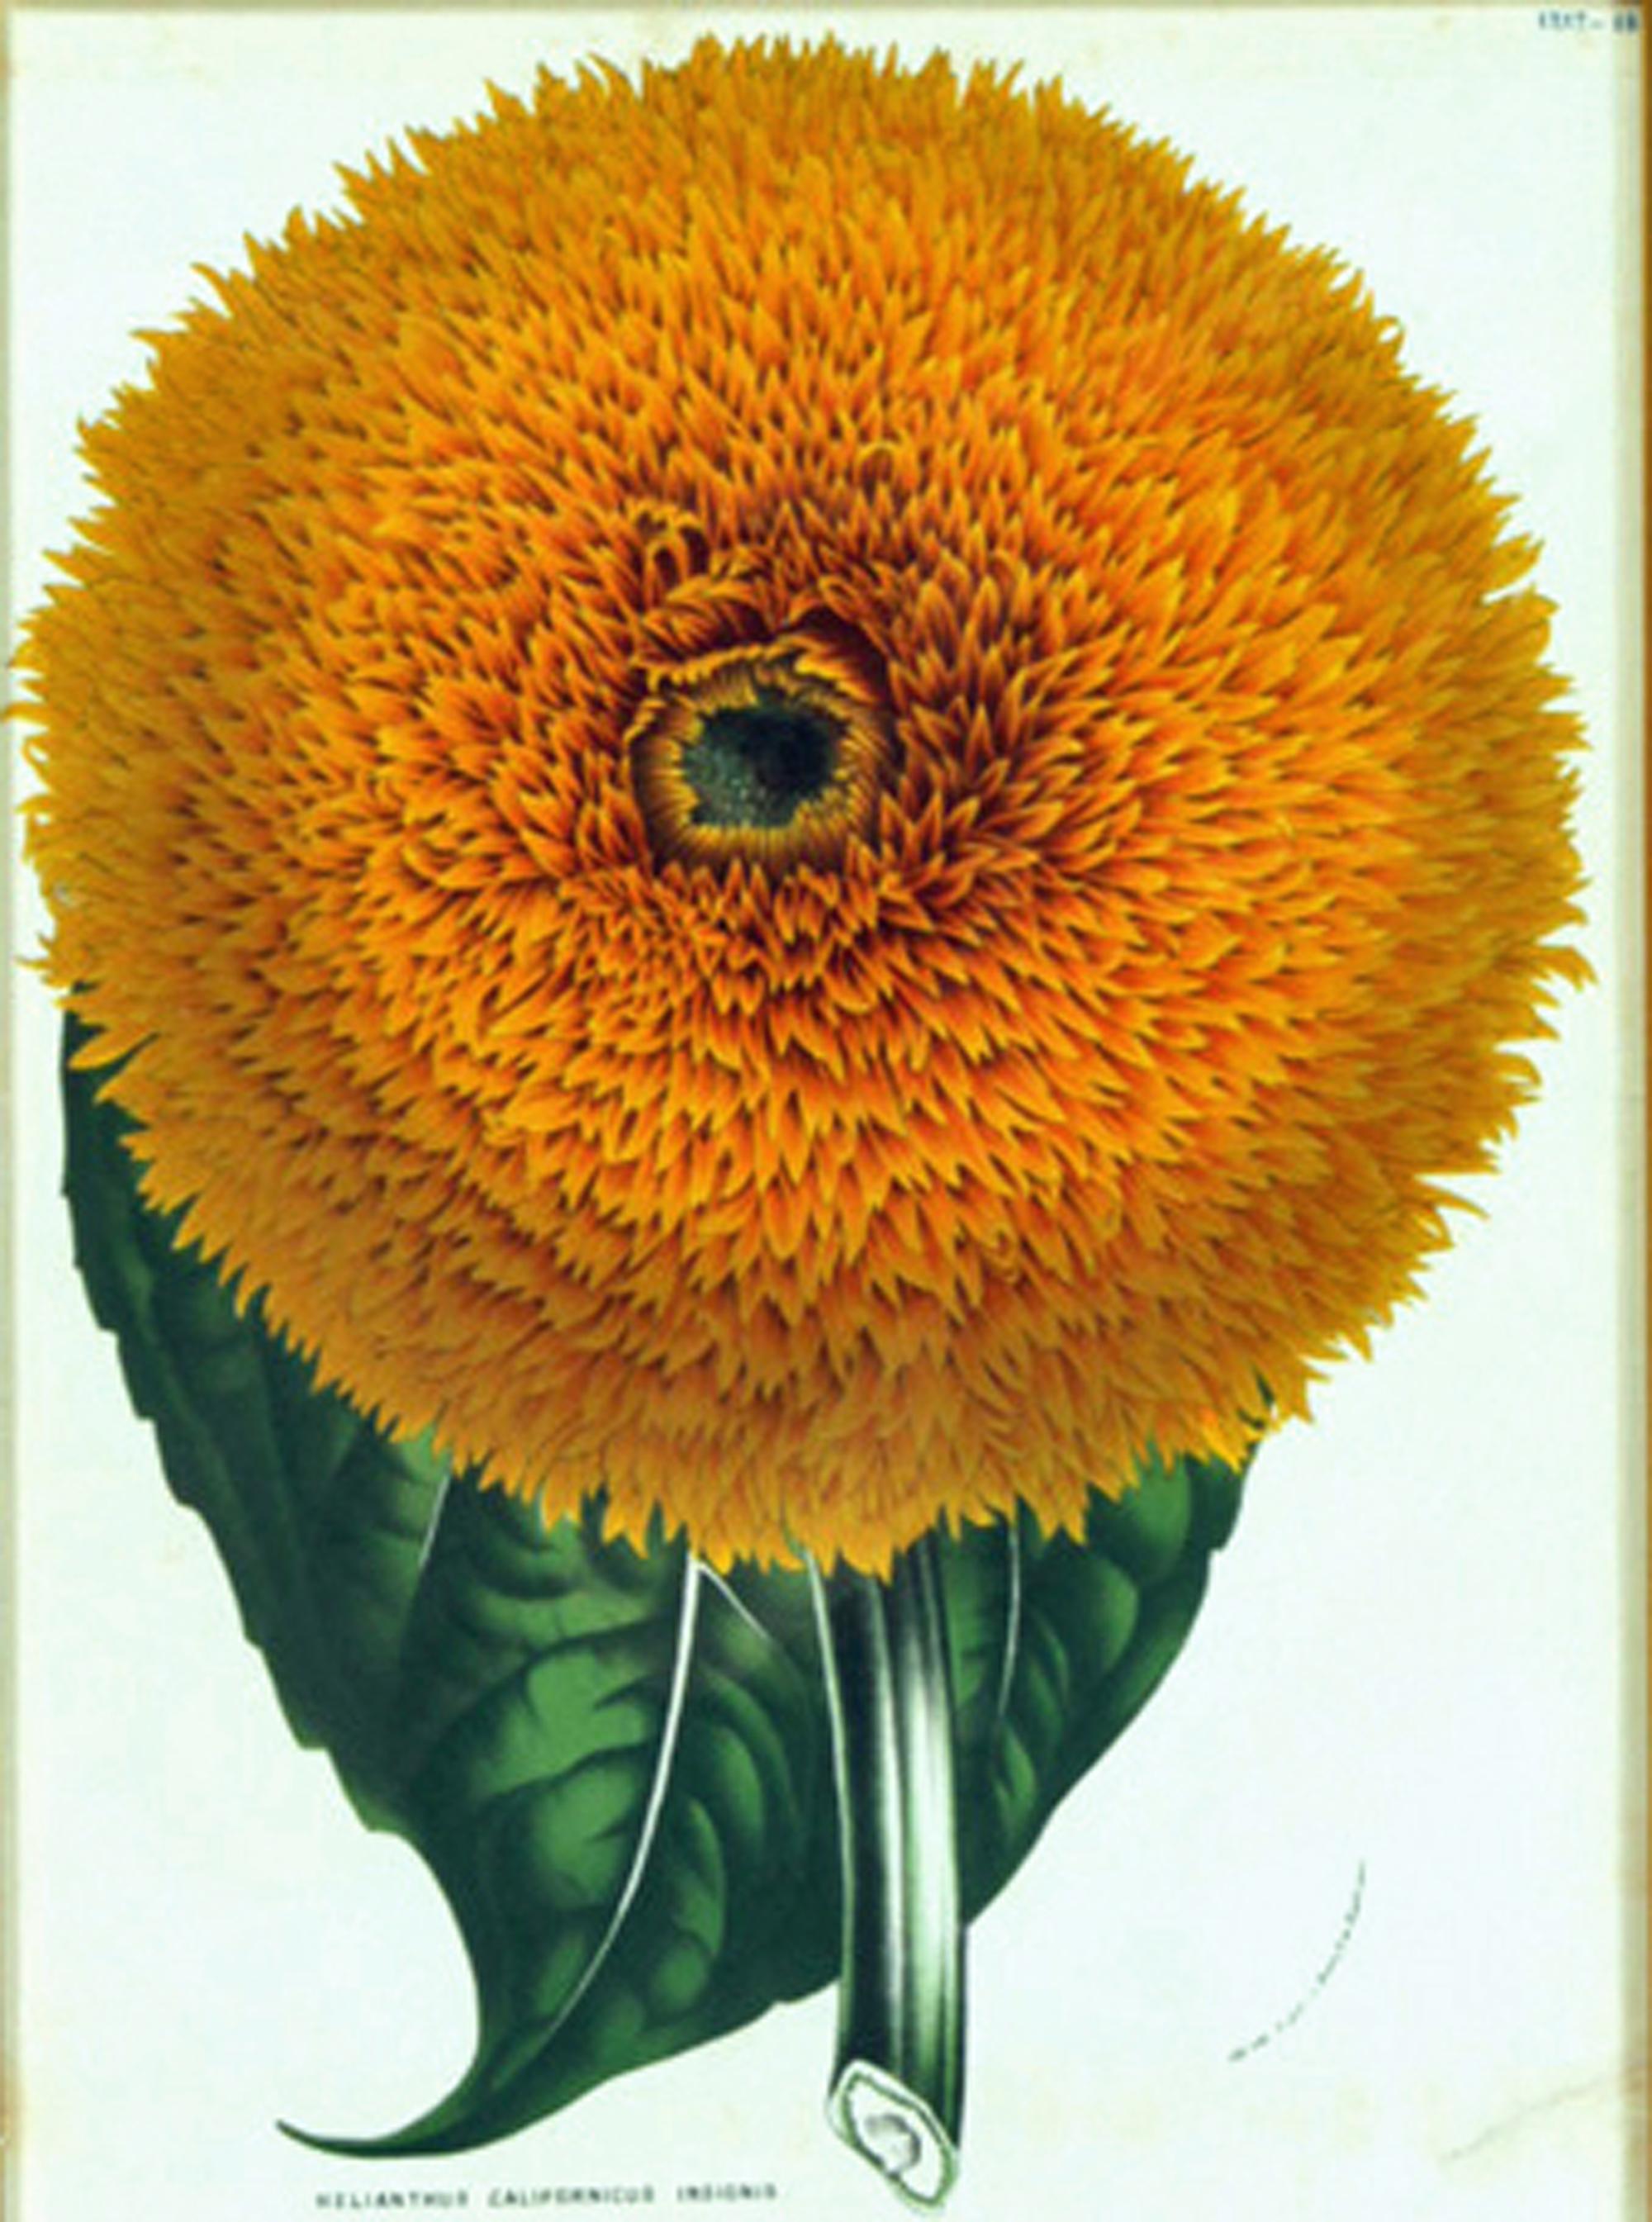 Botanical Print of Helianthus Californicus Insignis,
The Californian Sunflower,
Flore des serres et des jardins de l'Europe,
Louis van Houtte. (1810-1876)

The framed print depicts the Californian sunflower.  The flower is large and completely fills